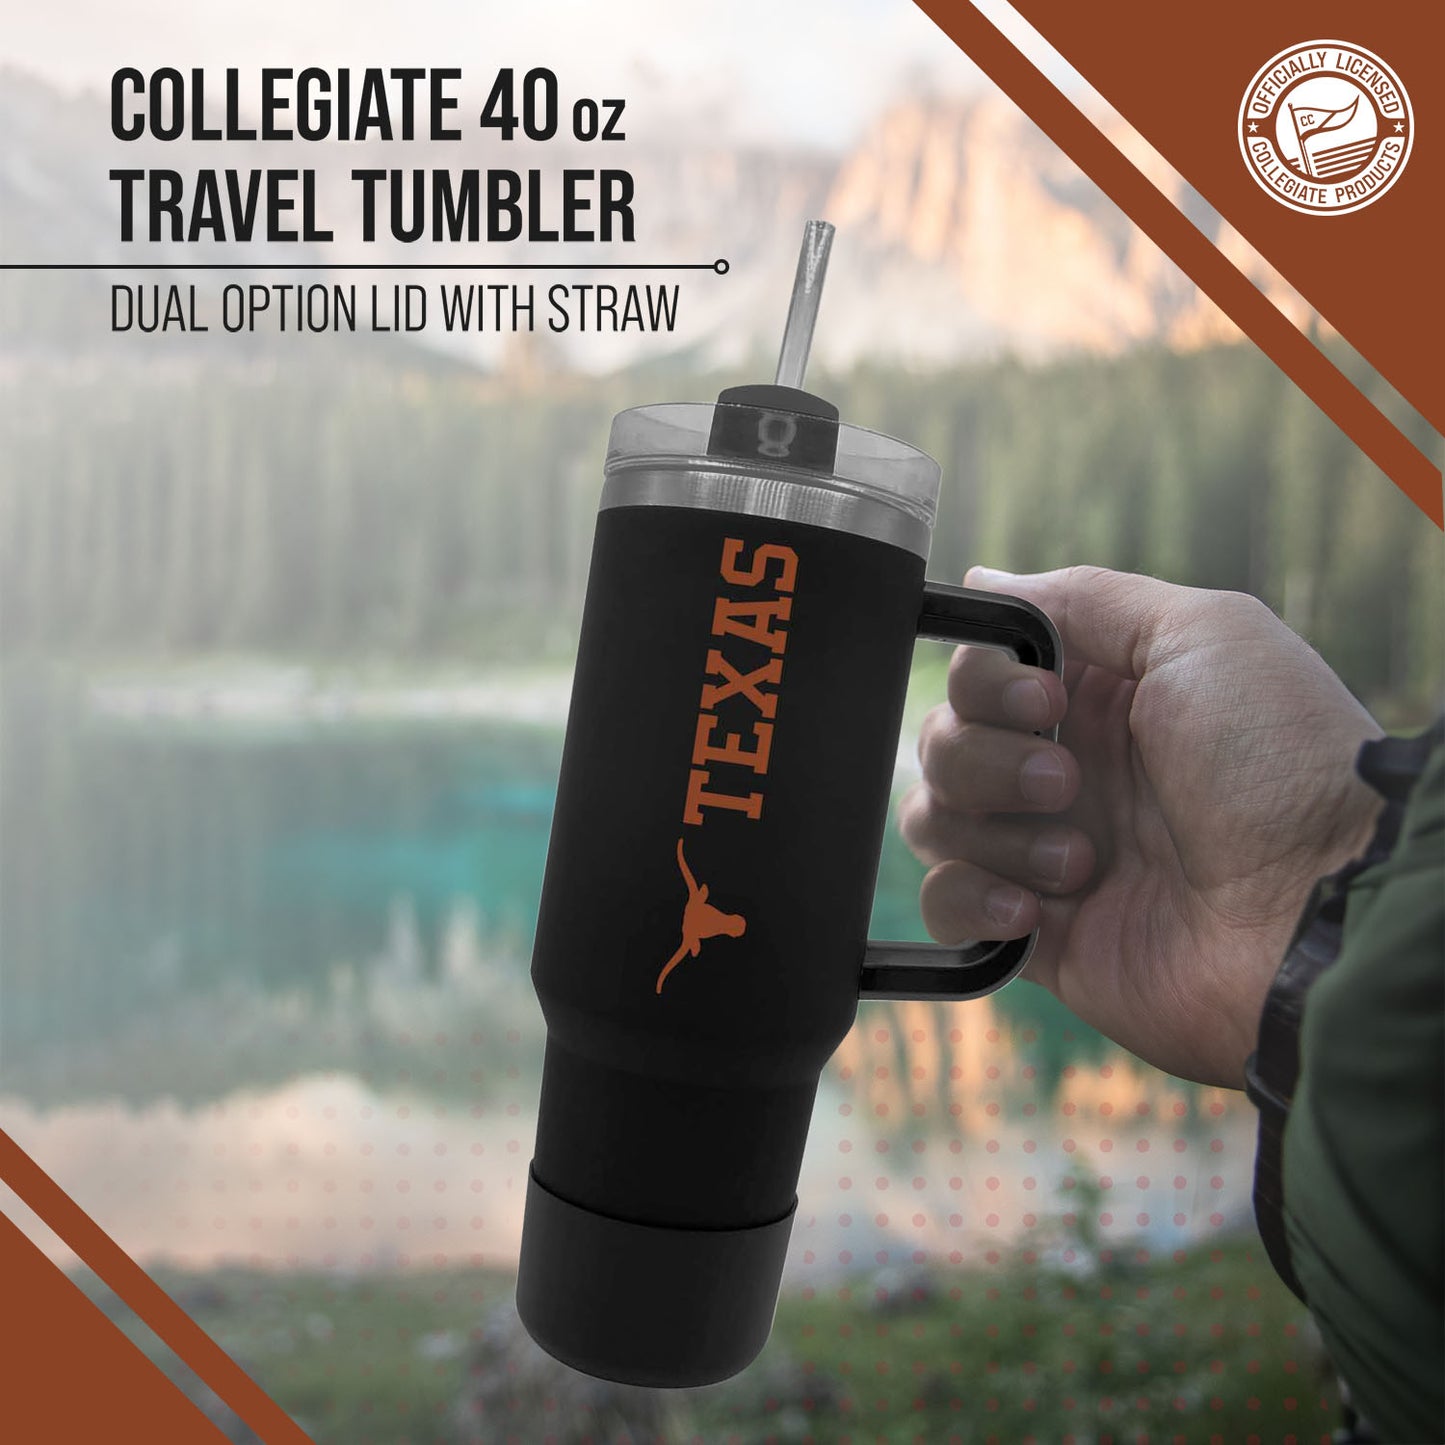 Texas Longhorns College & University 40 oz Travel Tumbler With Handle - Black